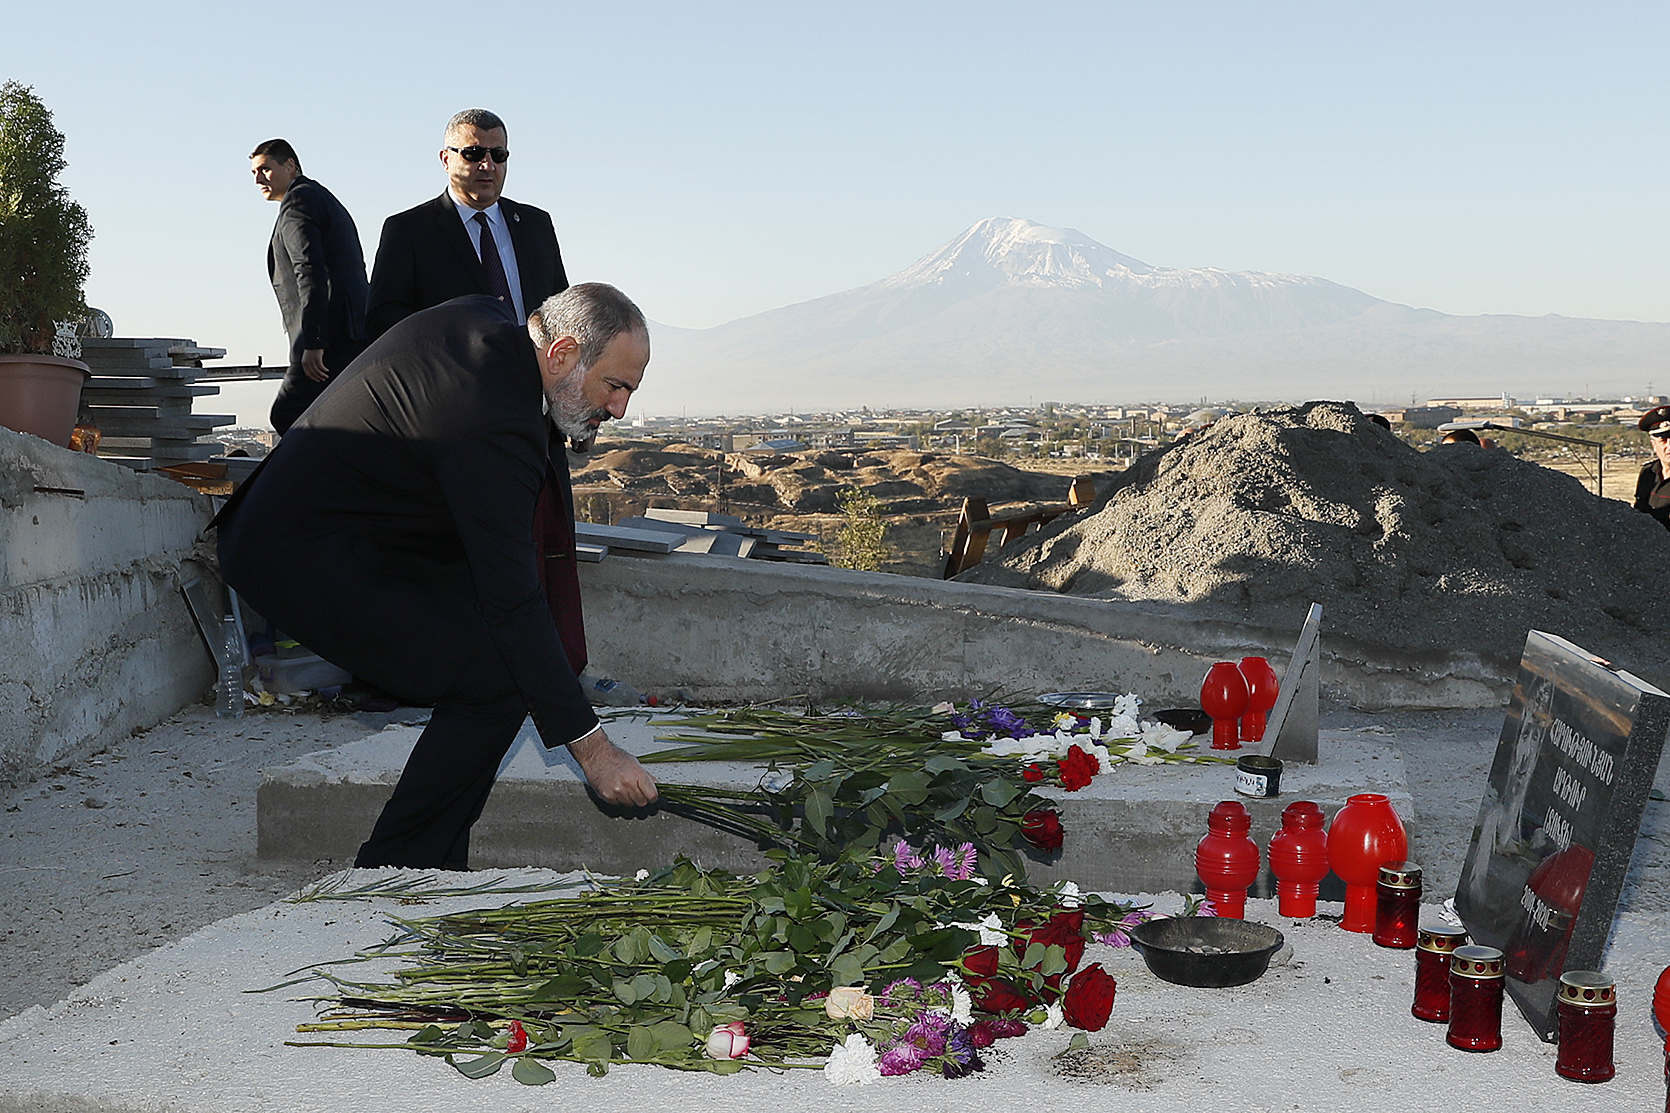 Armenia, Azerbaijan mark one-year anniversary of war